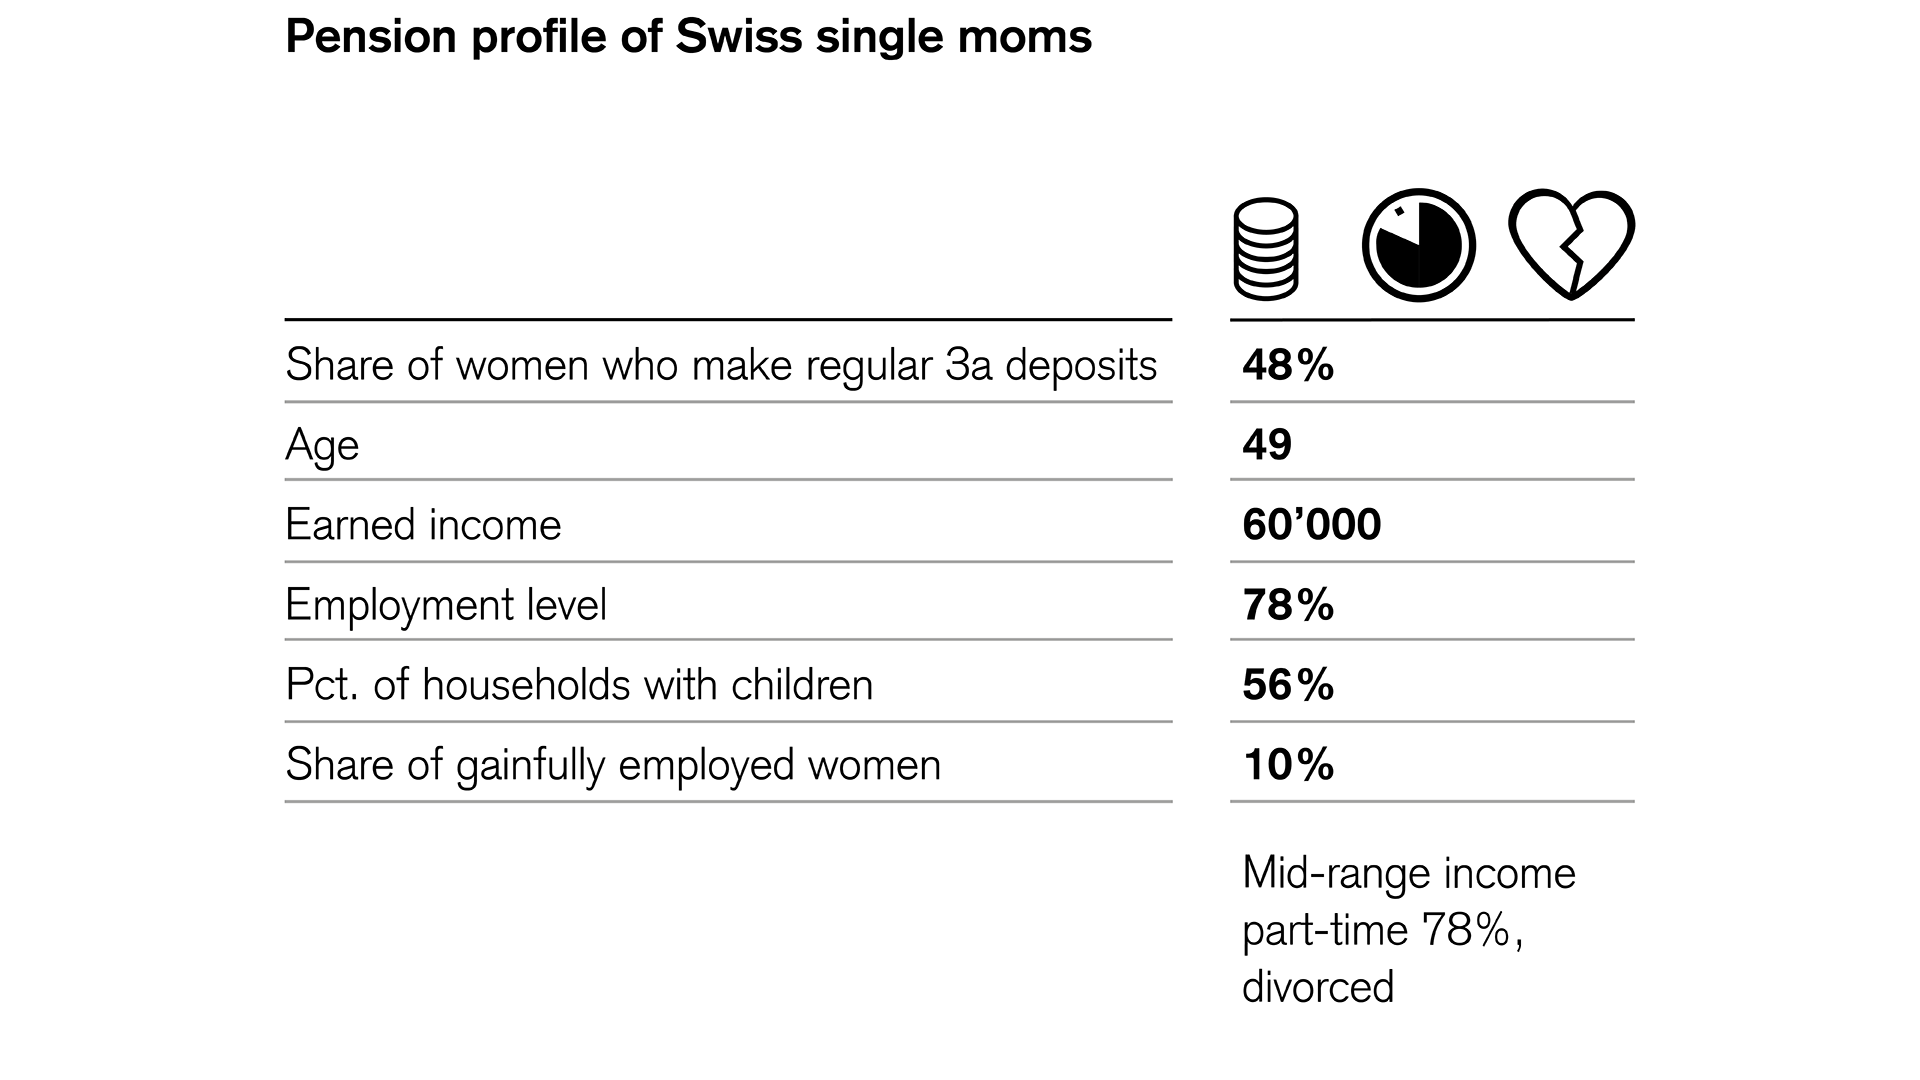 Pension provision profile of single women in Switzerland